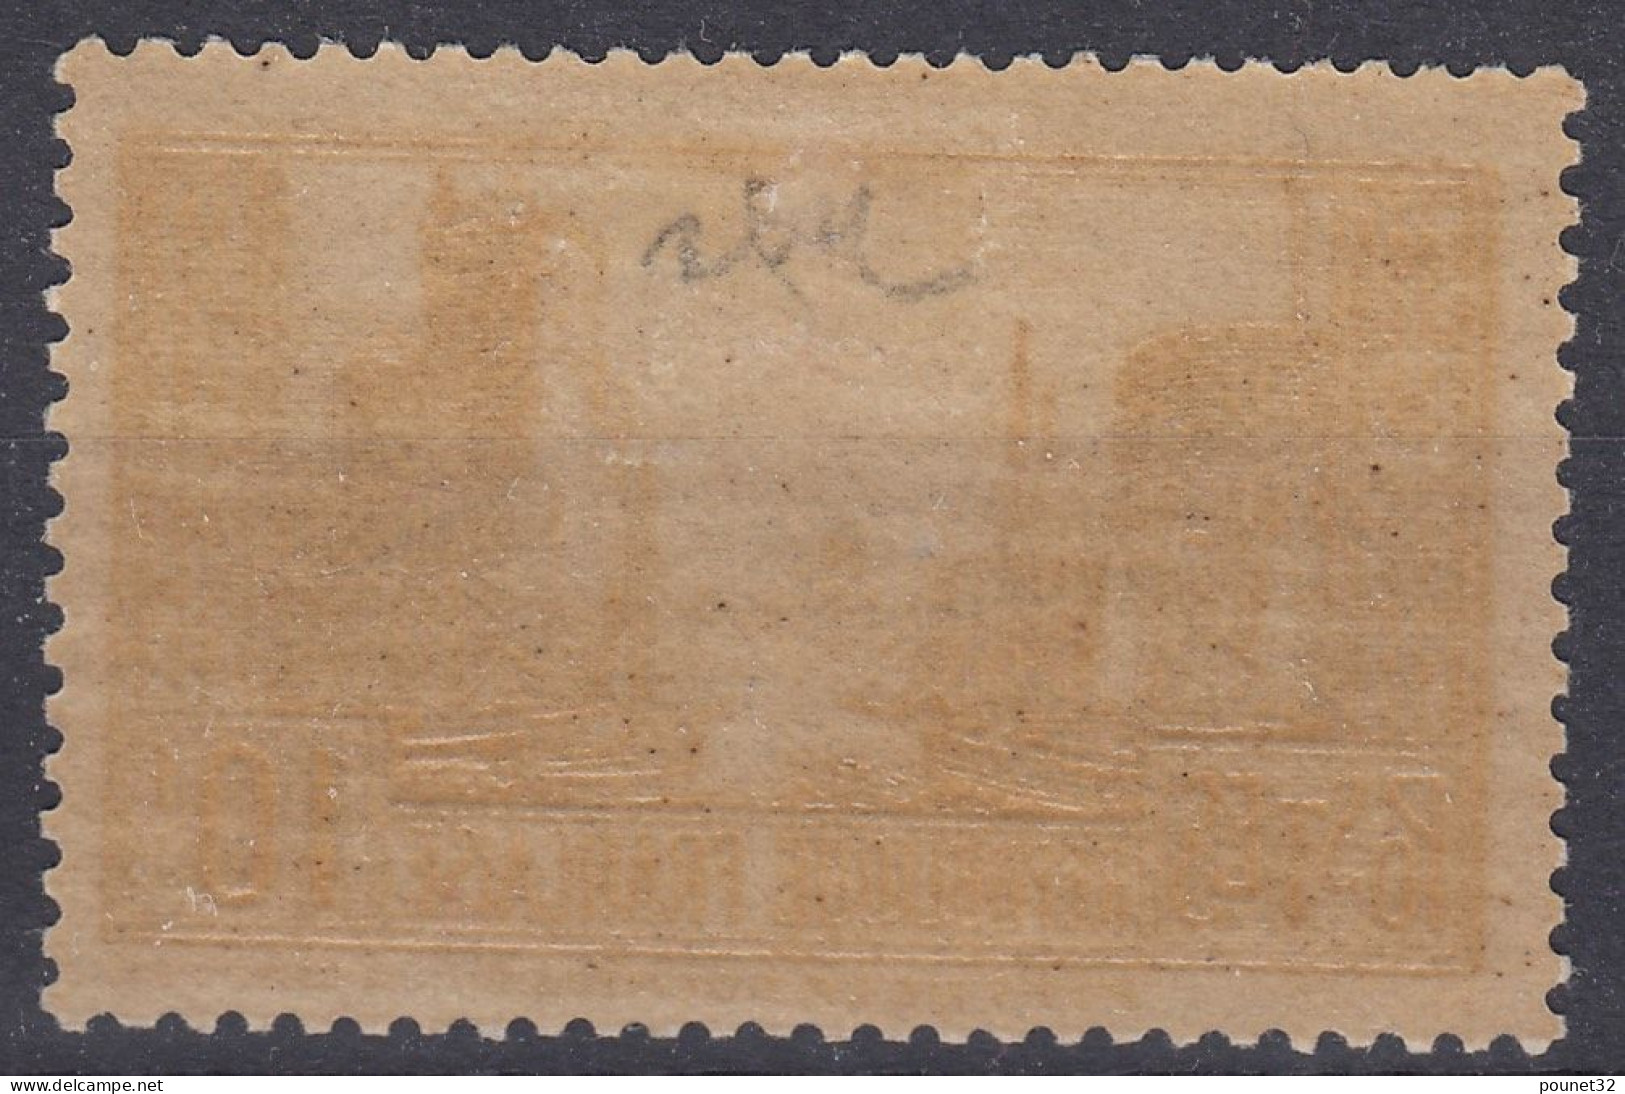 TIMBRE FRANCE PORT DE LA ROCHELLE N° 261c TYPE II NEUF * GOMME TRACE DE CHARNIERE - COTE 200 € - Unused Stamps